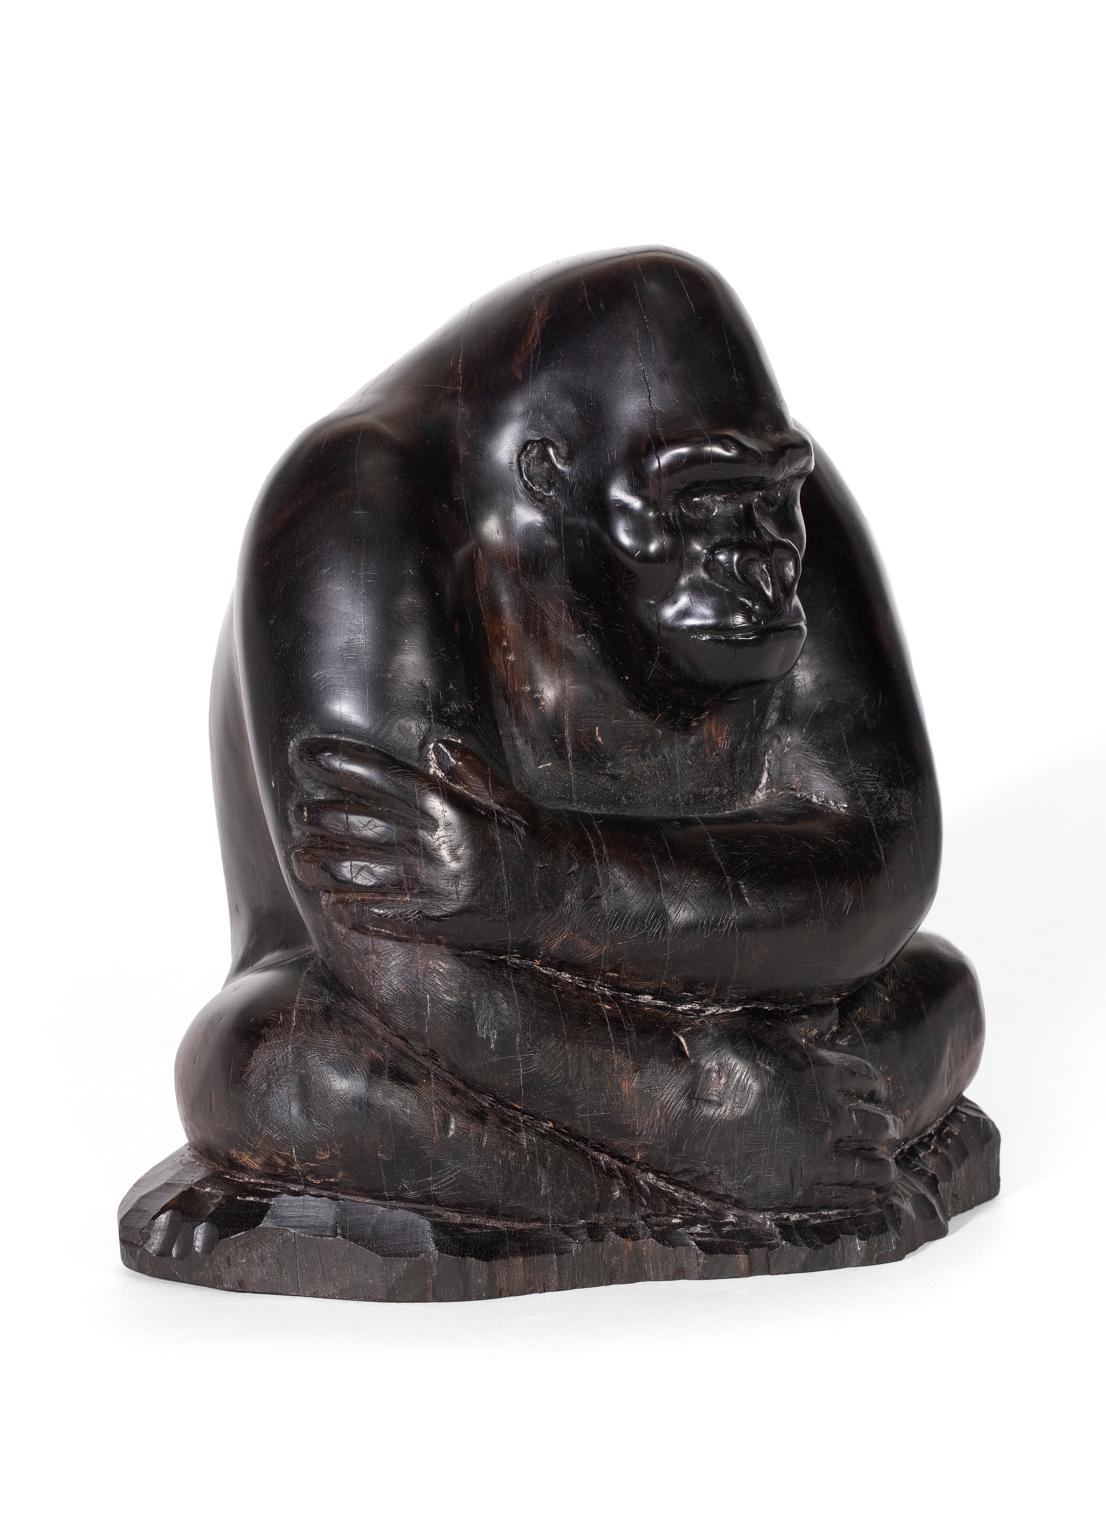 Tom Brun Figurative Sculpture - "Jim Jim" Ebony Sculpture with Dark Patina, Portrait of Detroit Zoo Gorilla